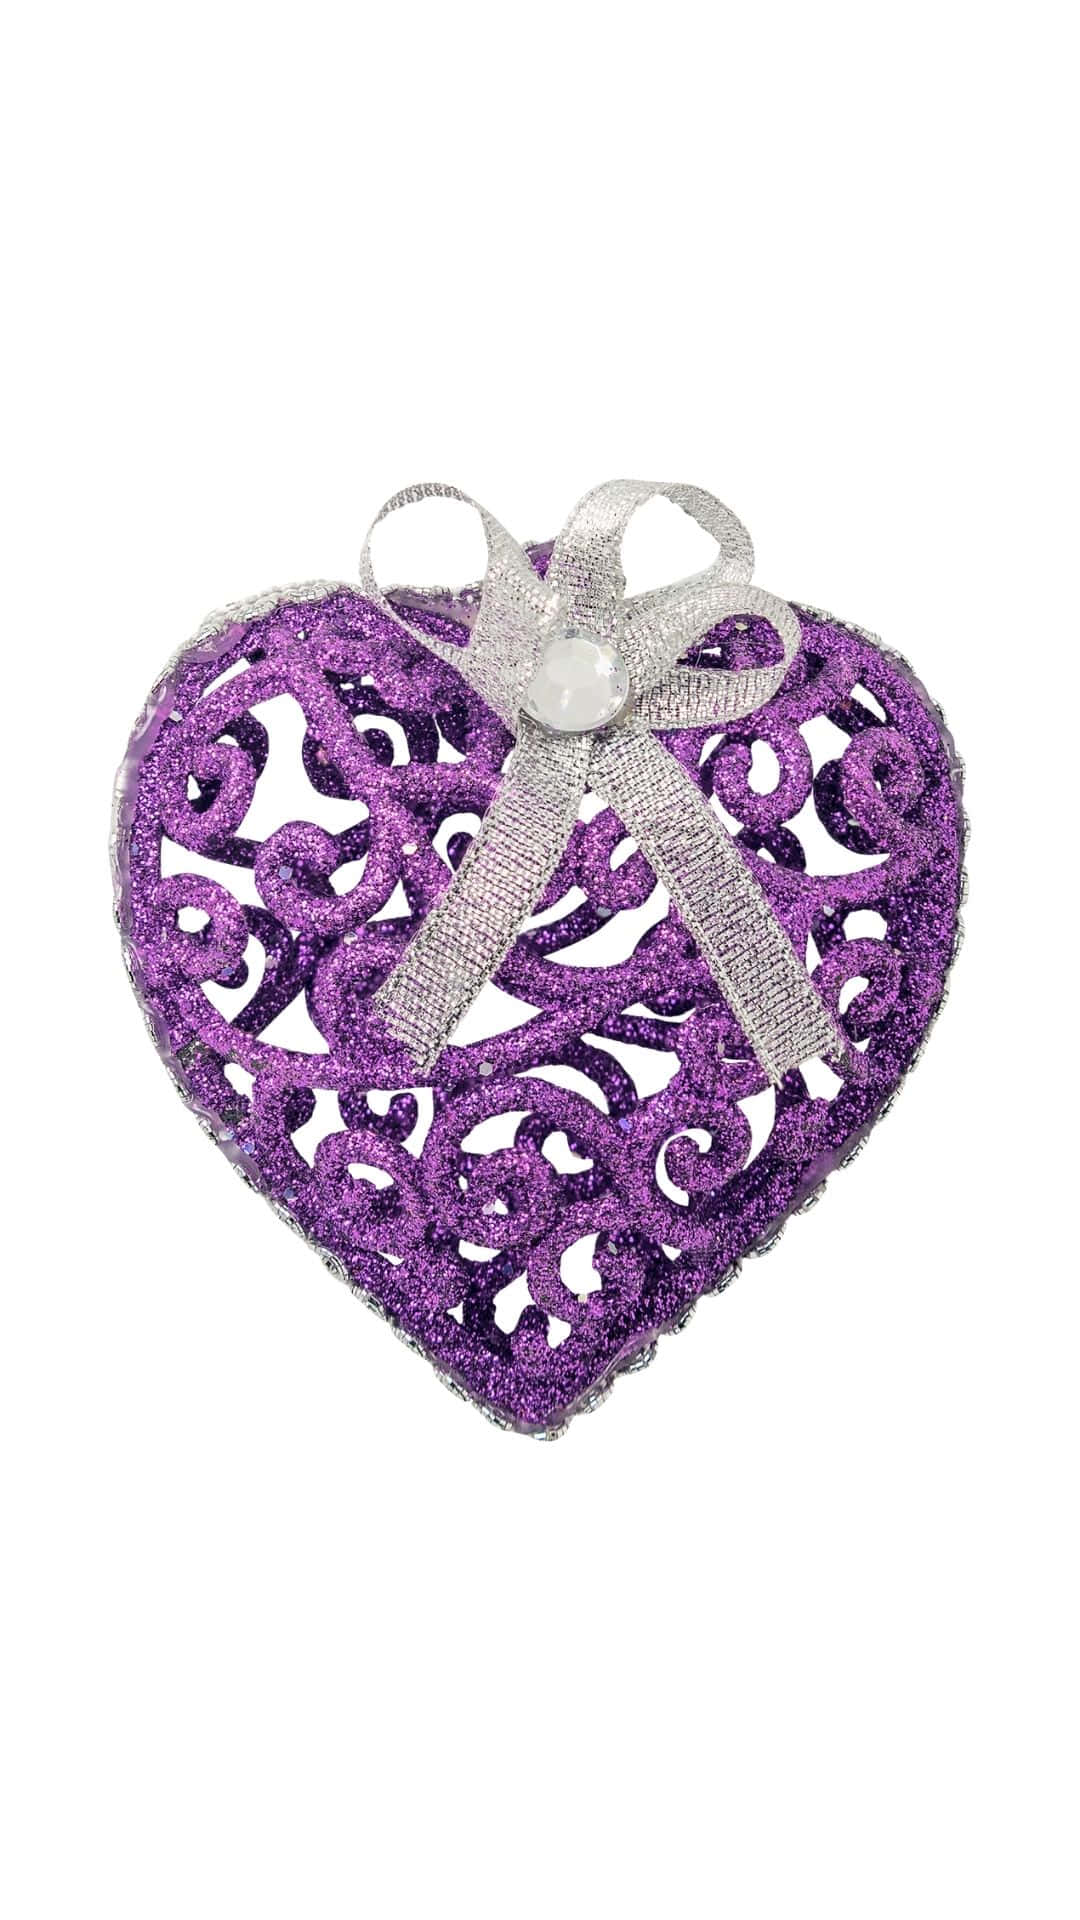 Purple Heart Background Glittery Weaved Structure